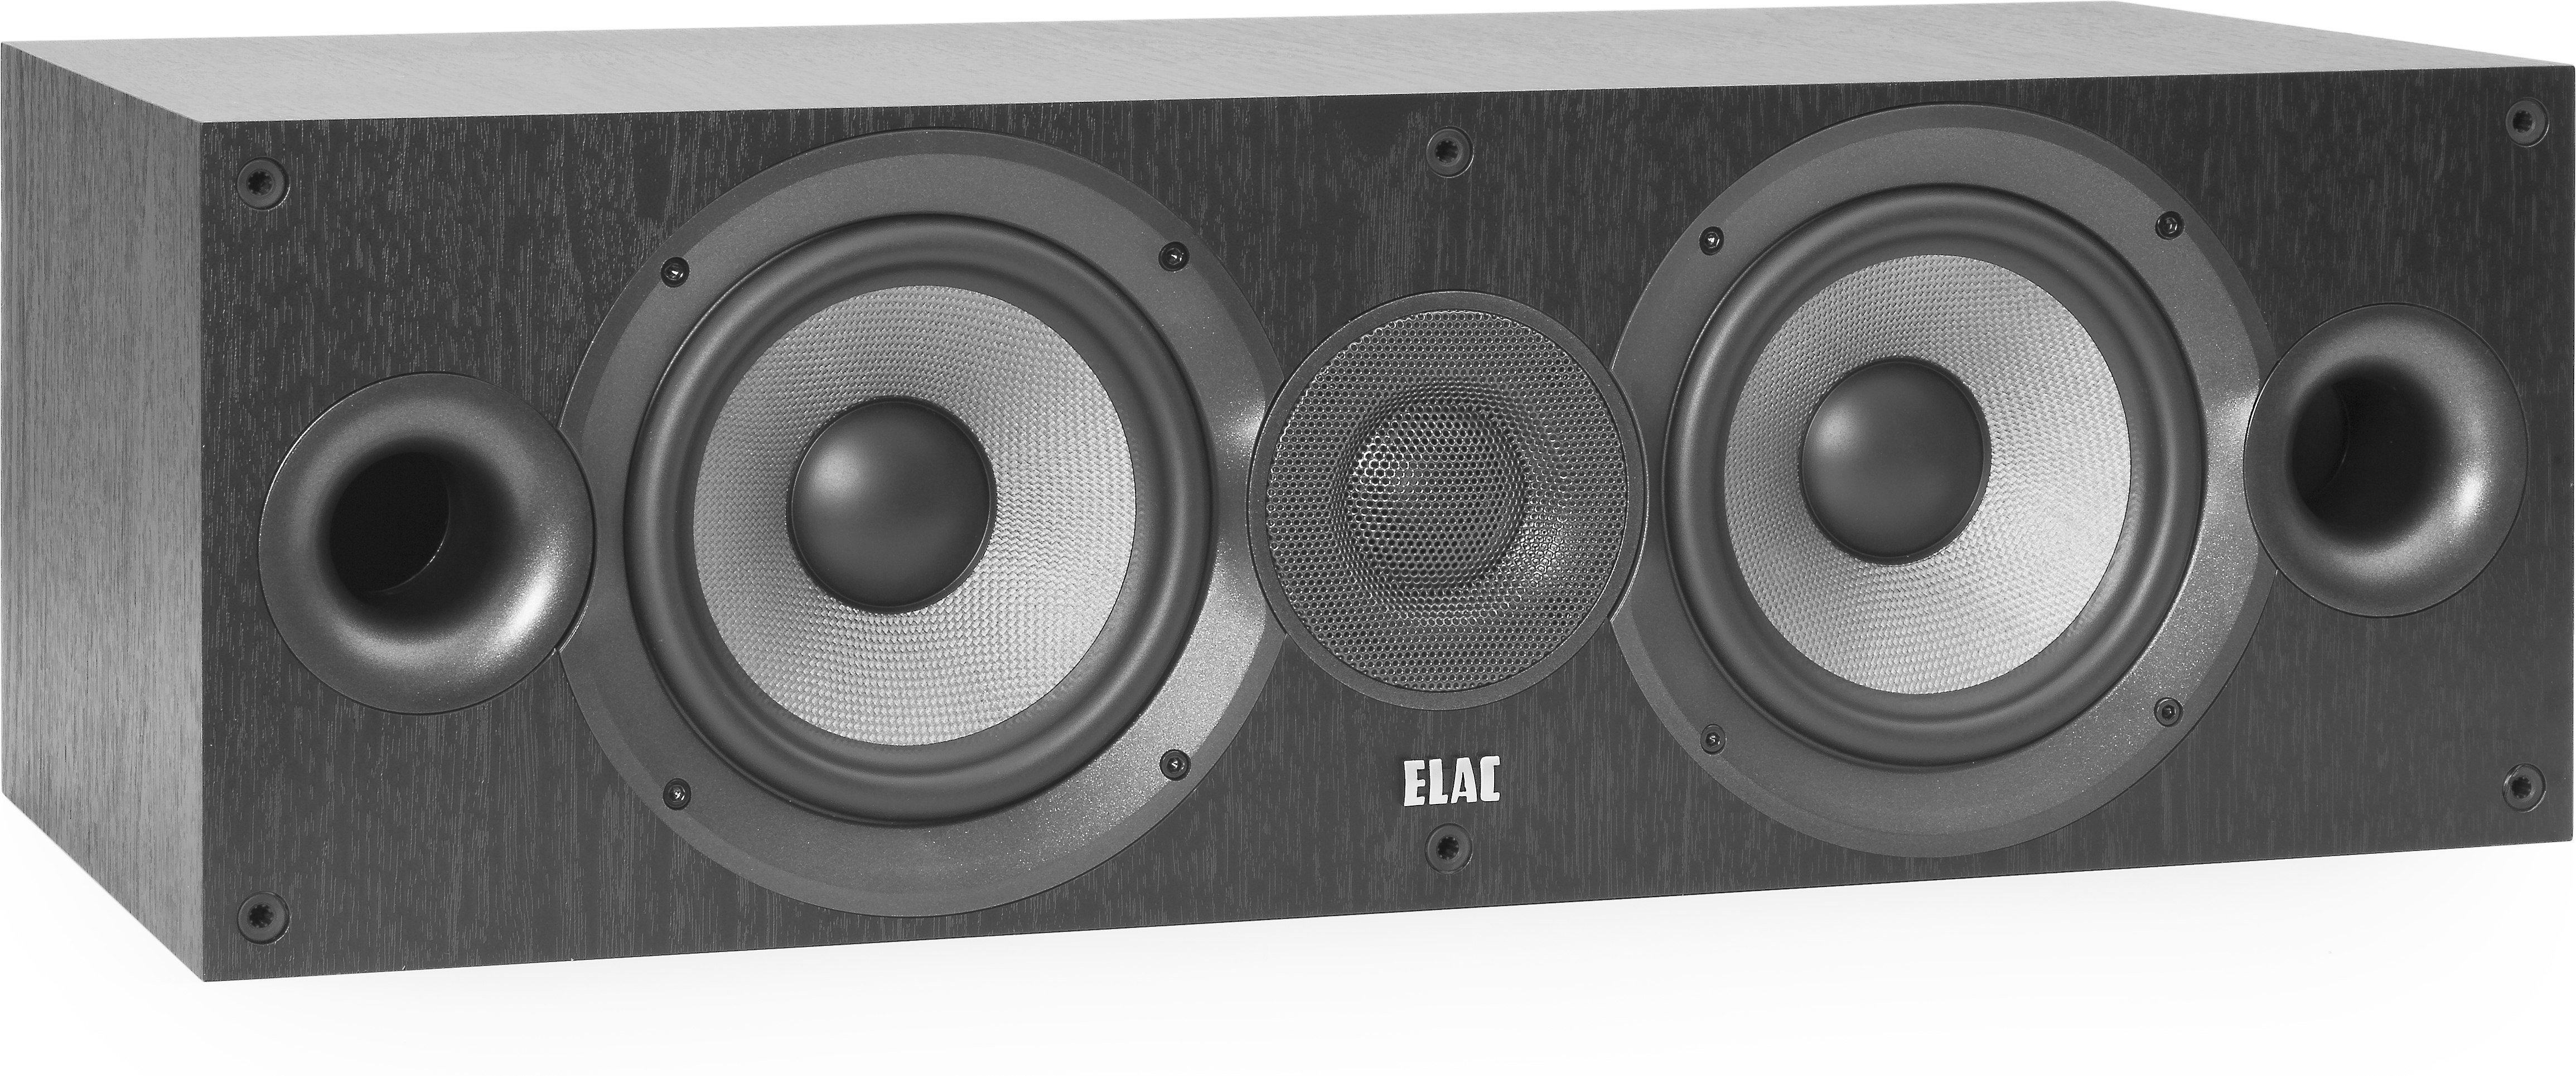 Elac 5.2 System with 2 Debut F6 2 BIC/Acoustech Platinum Series PL-200 II Subwoofer 2 Debut B5 1 Debut C5 Center Speaker 